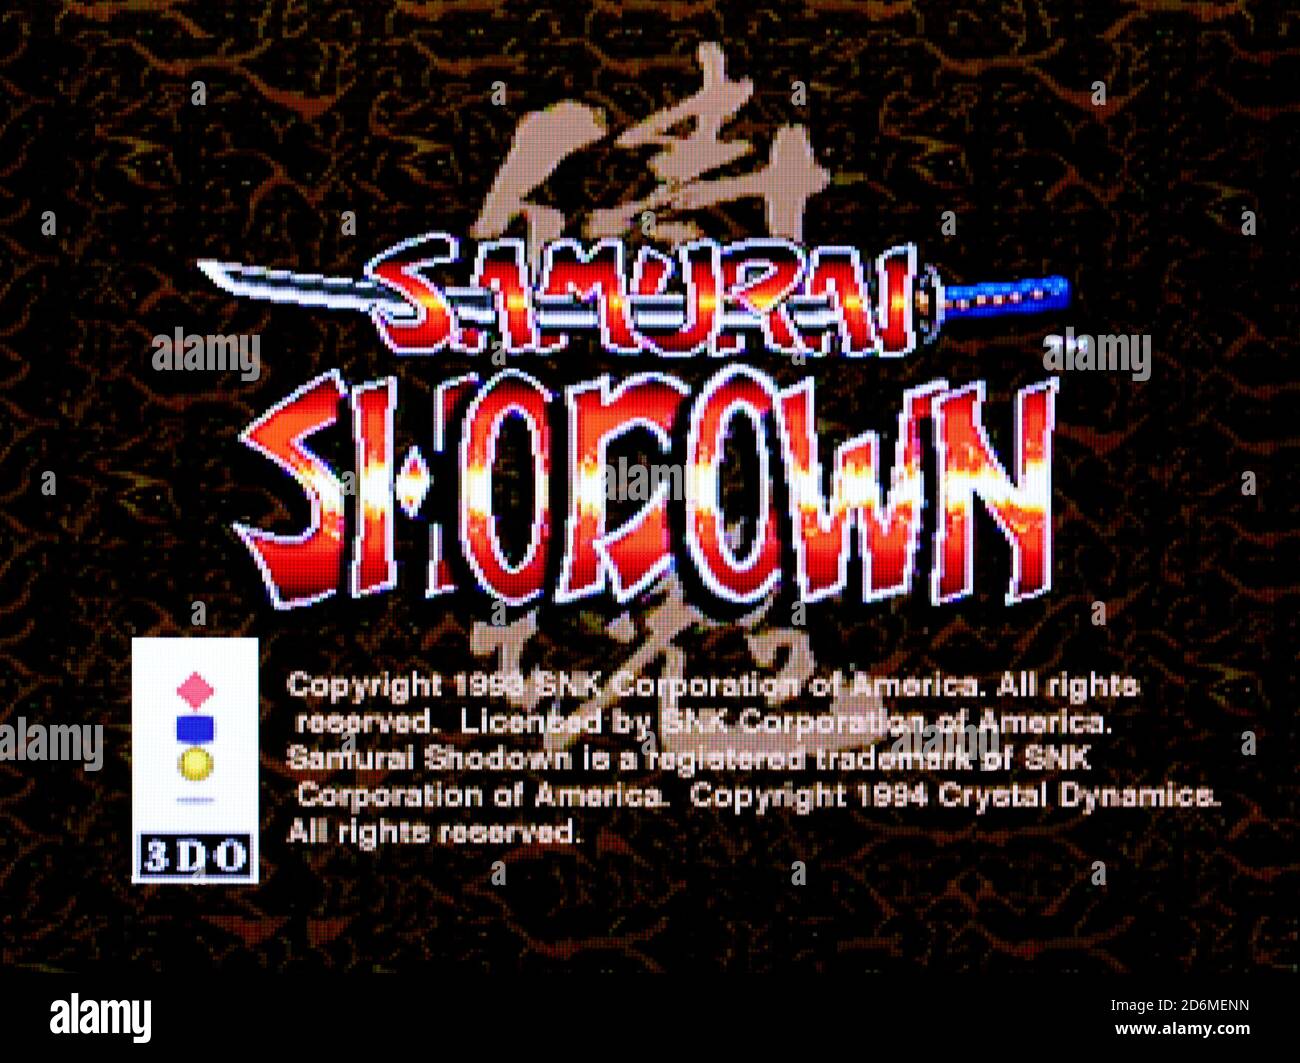 Samurai Shodown - 3DO Interactive Multiplayer Videogame - Editorial Use Only Stock Photo